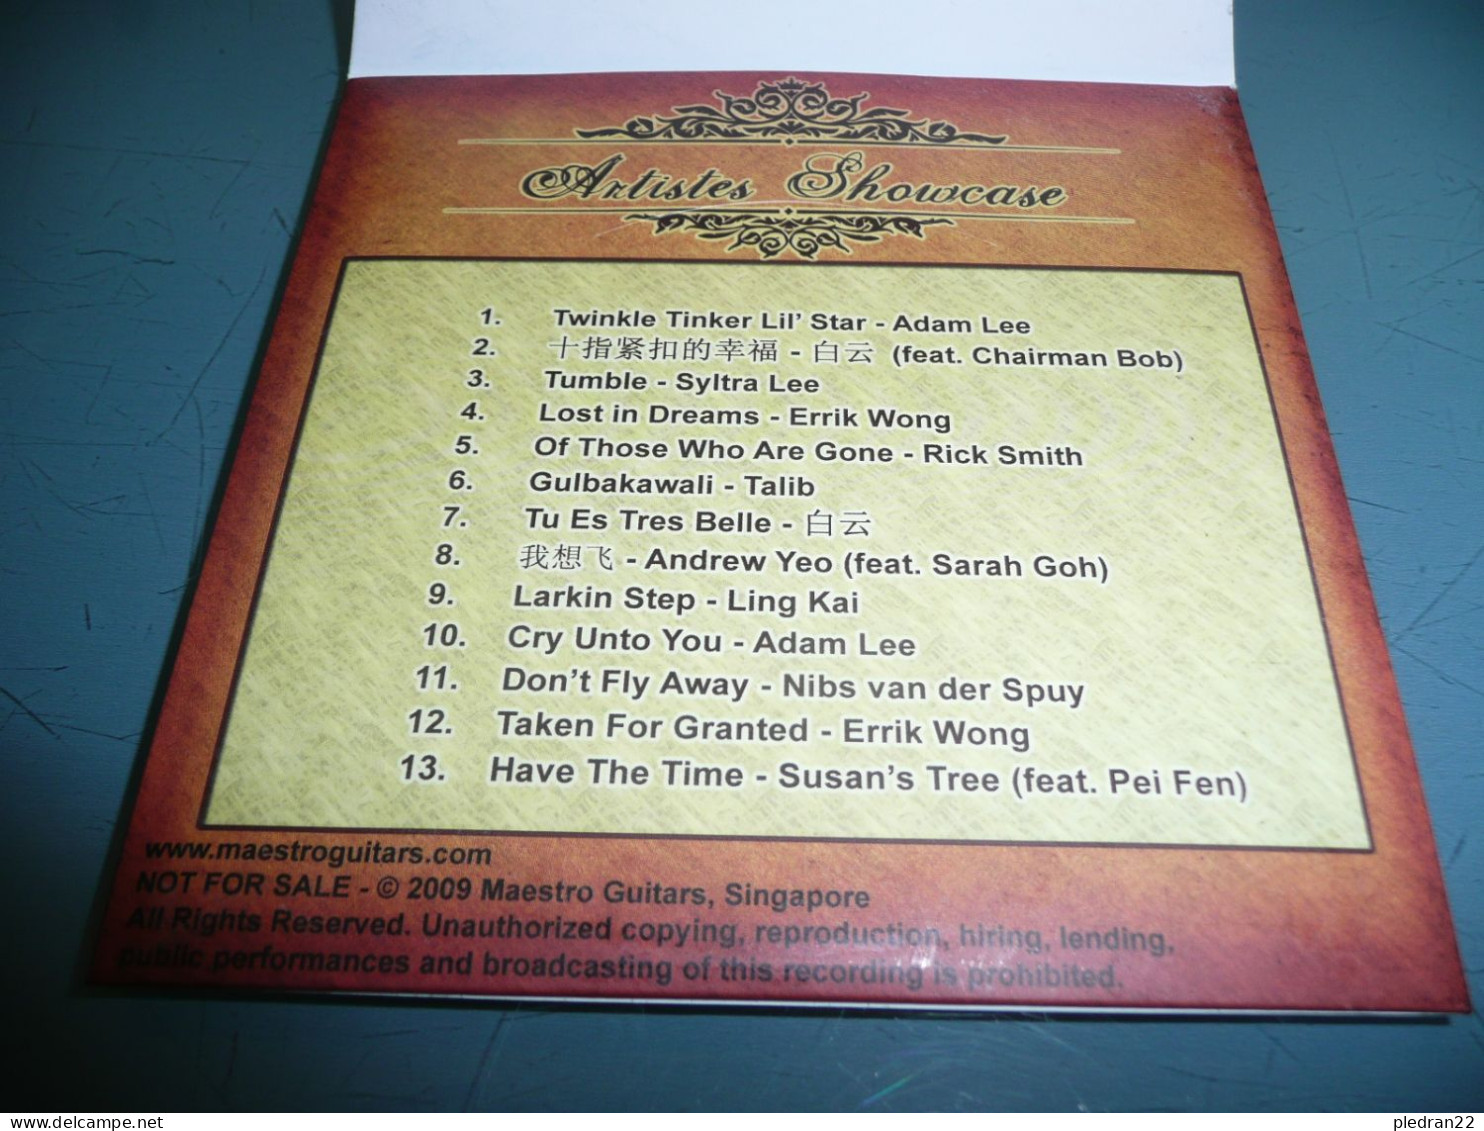 MAESTRO SINGAPORE HANDCRAFTED GUITARS ARTISTES SHOWCASE 2009 CD COMPILATION VOL. 2 - Compilations